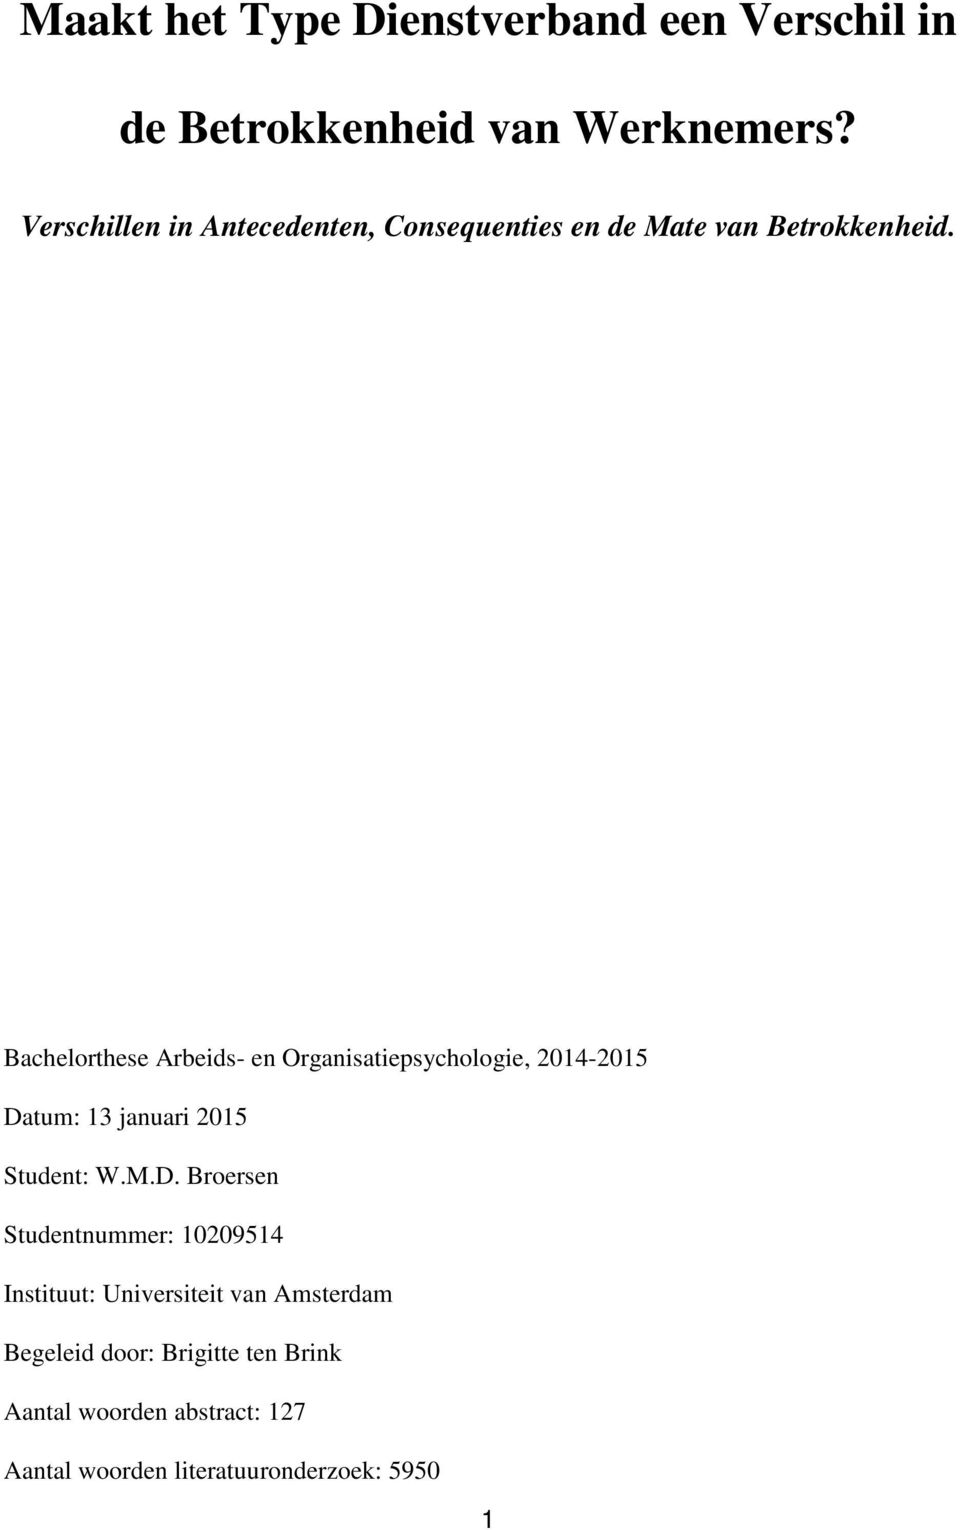 Bachelorthese Arbeids- en Organisatiepsychologie, 2014-2015 Da